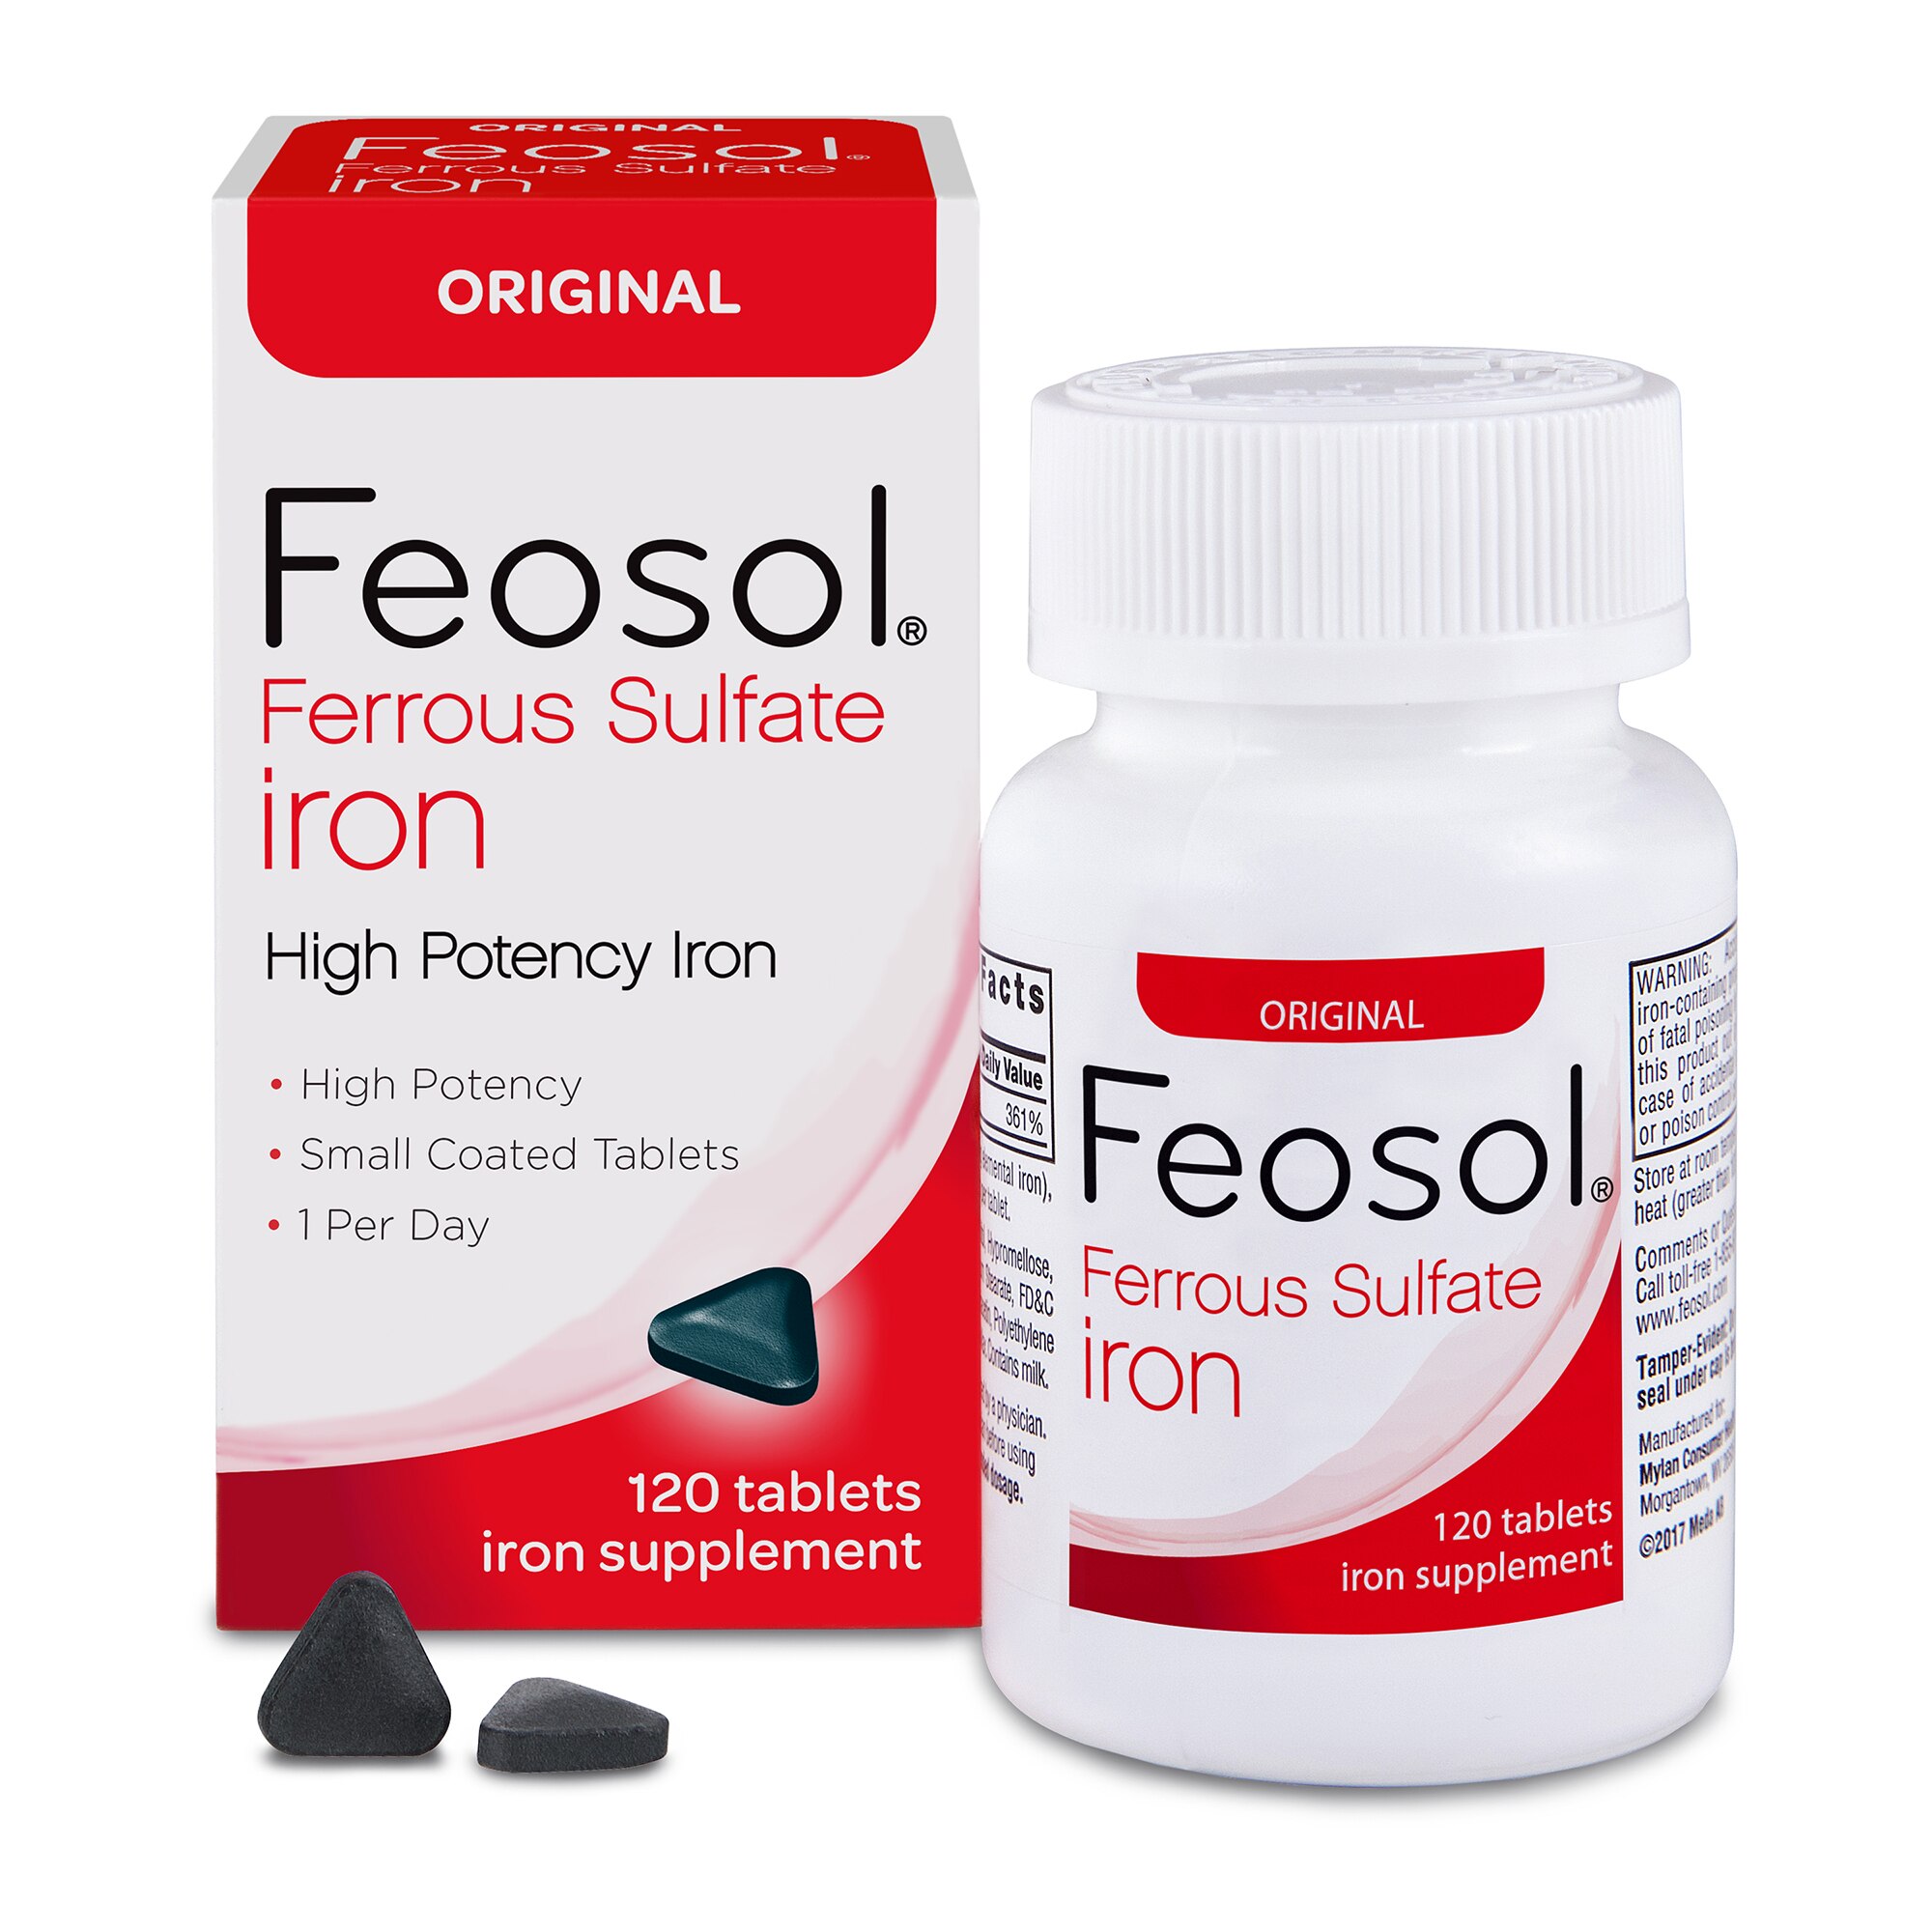 Feosol Ferrous Sulfate Iron Tablets